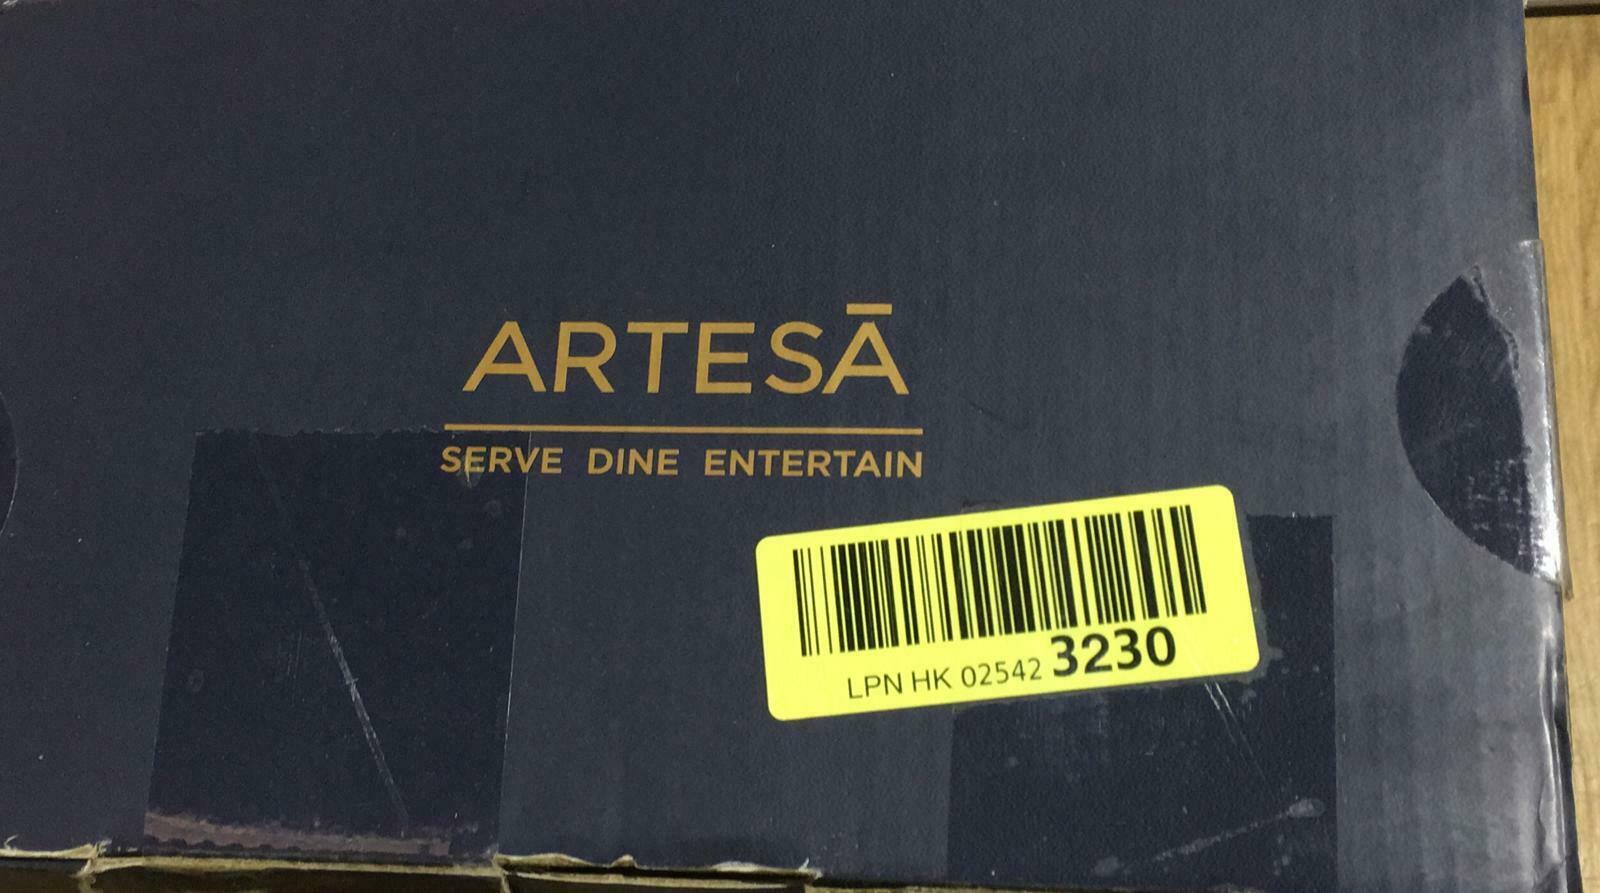 Artesa Hot Stone Grill in Gift Box- Marble- 41.5 x 22 x 15 cm-small DEFECT-3230